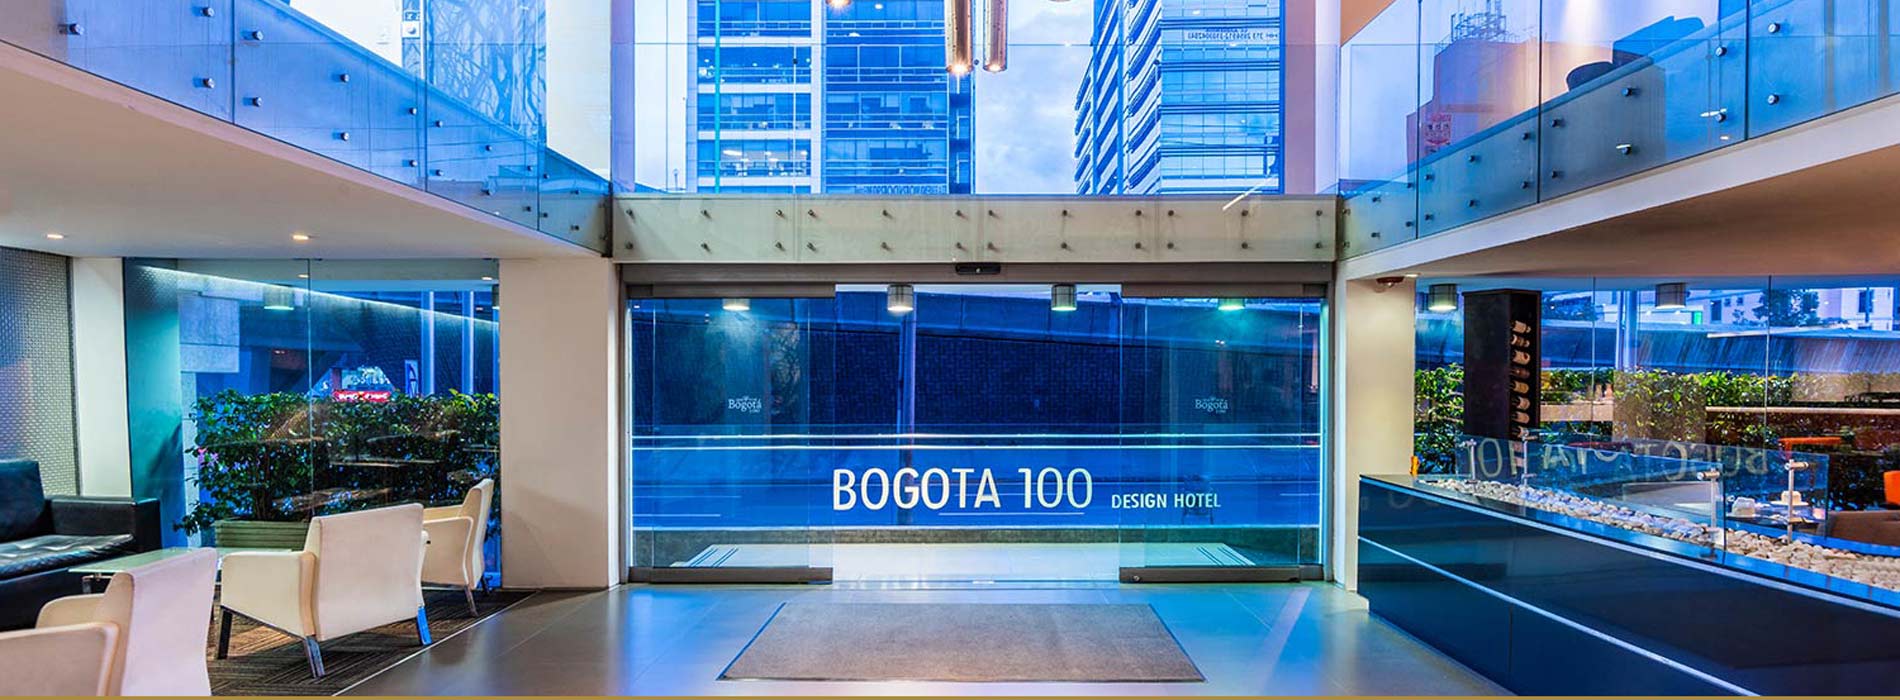 Bogotá 100 Design Hotel  header